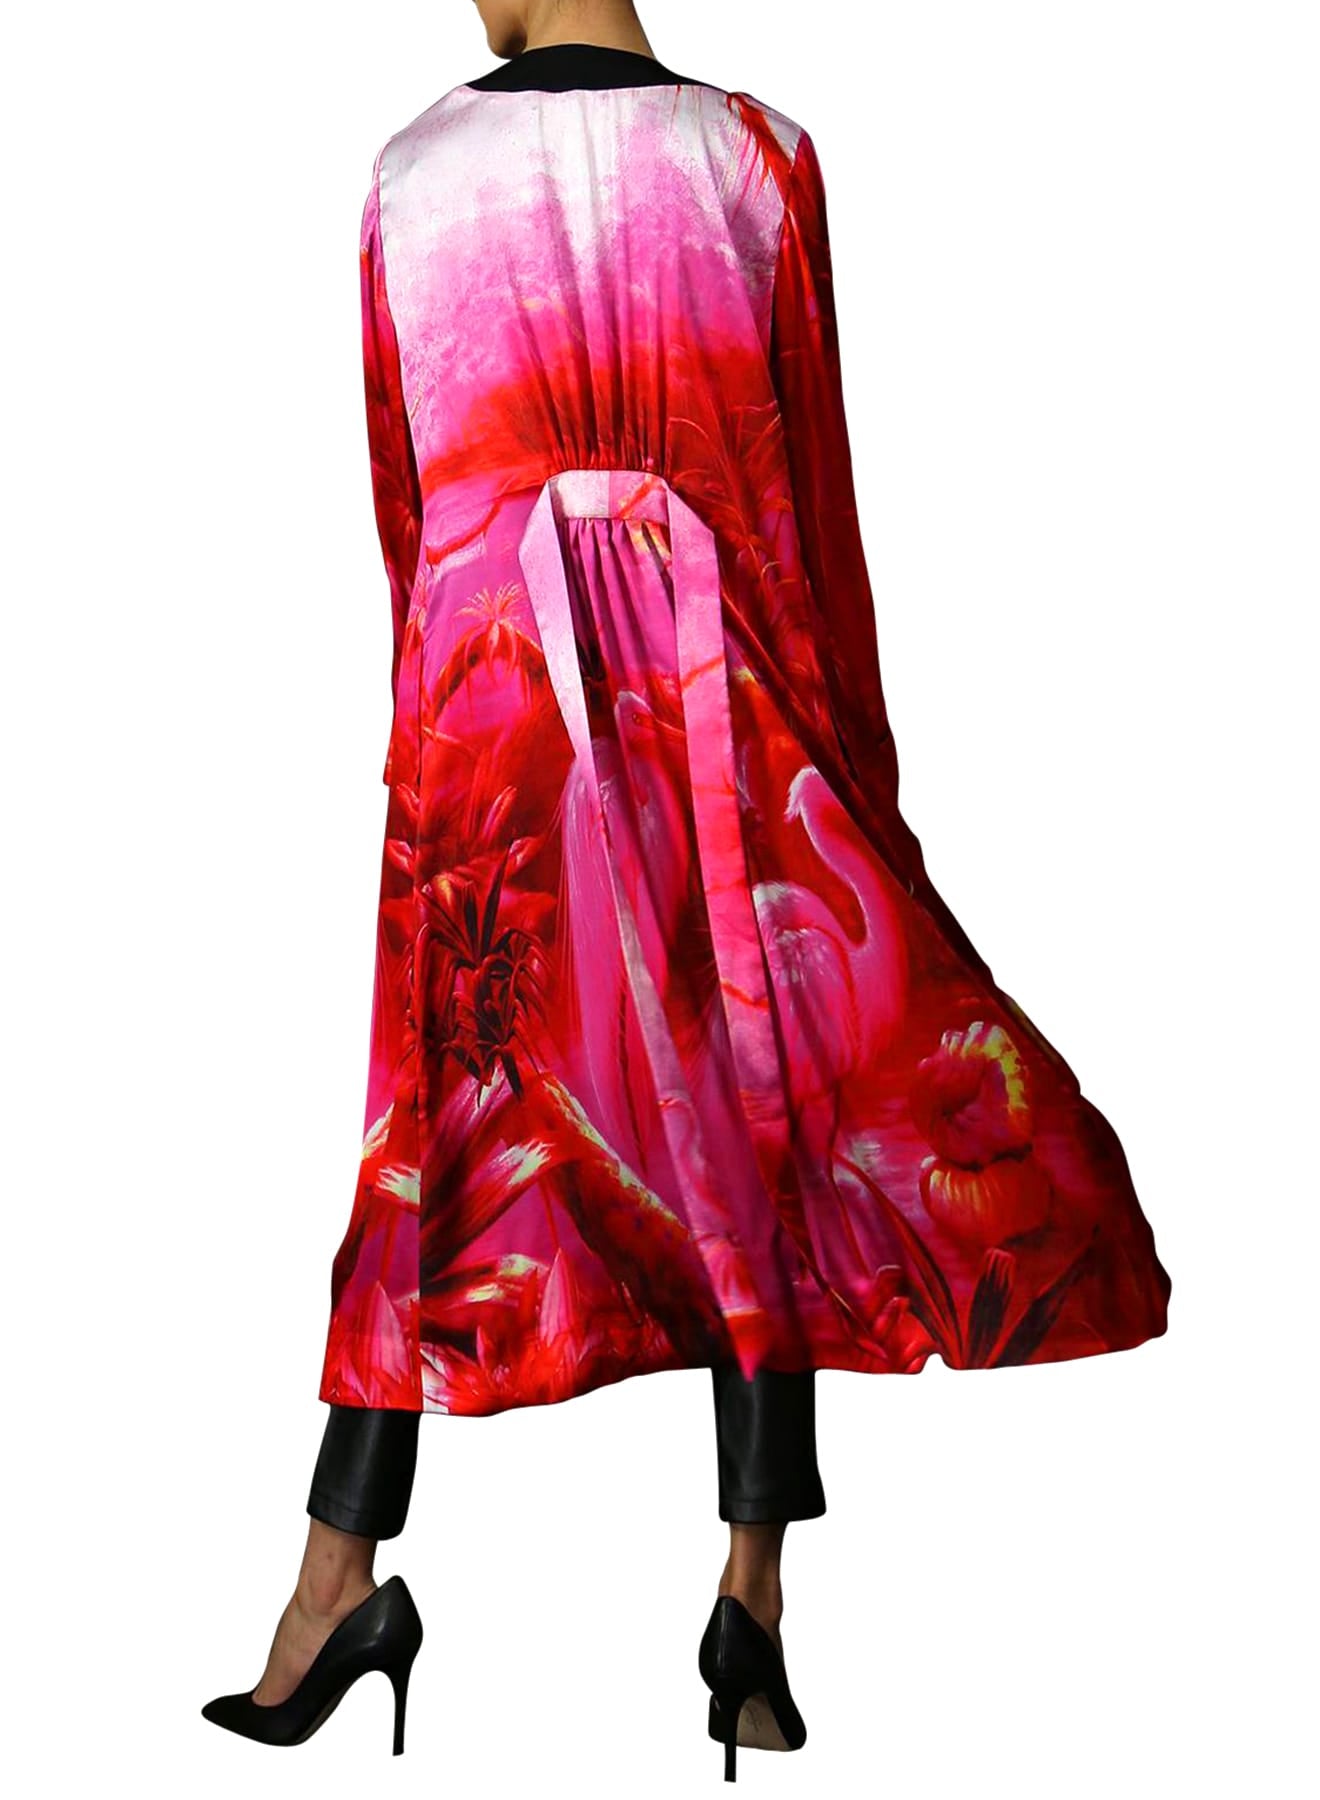 "plus size kimono" "beautiful kimono" "Kyle X Shahida" "womens kimono robes" "hot pink silk robe"